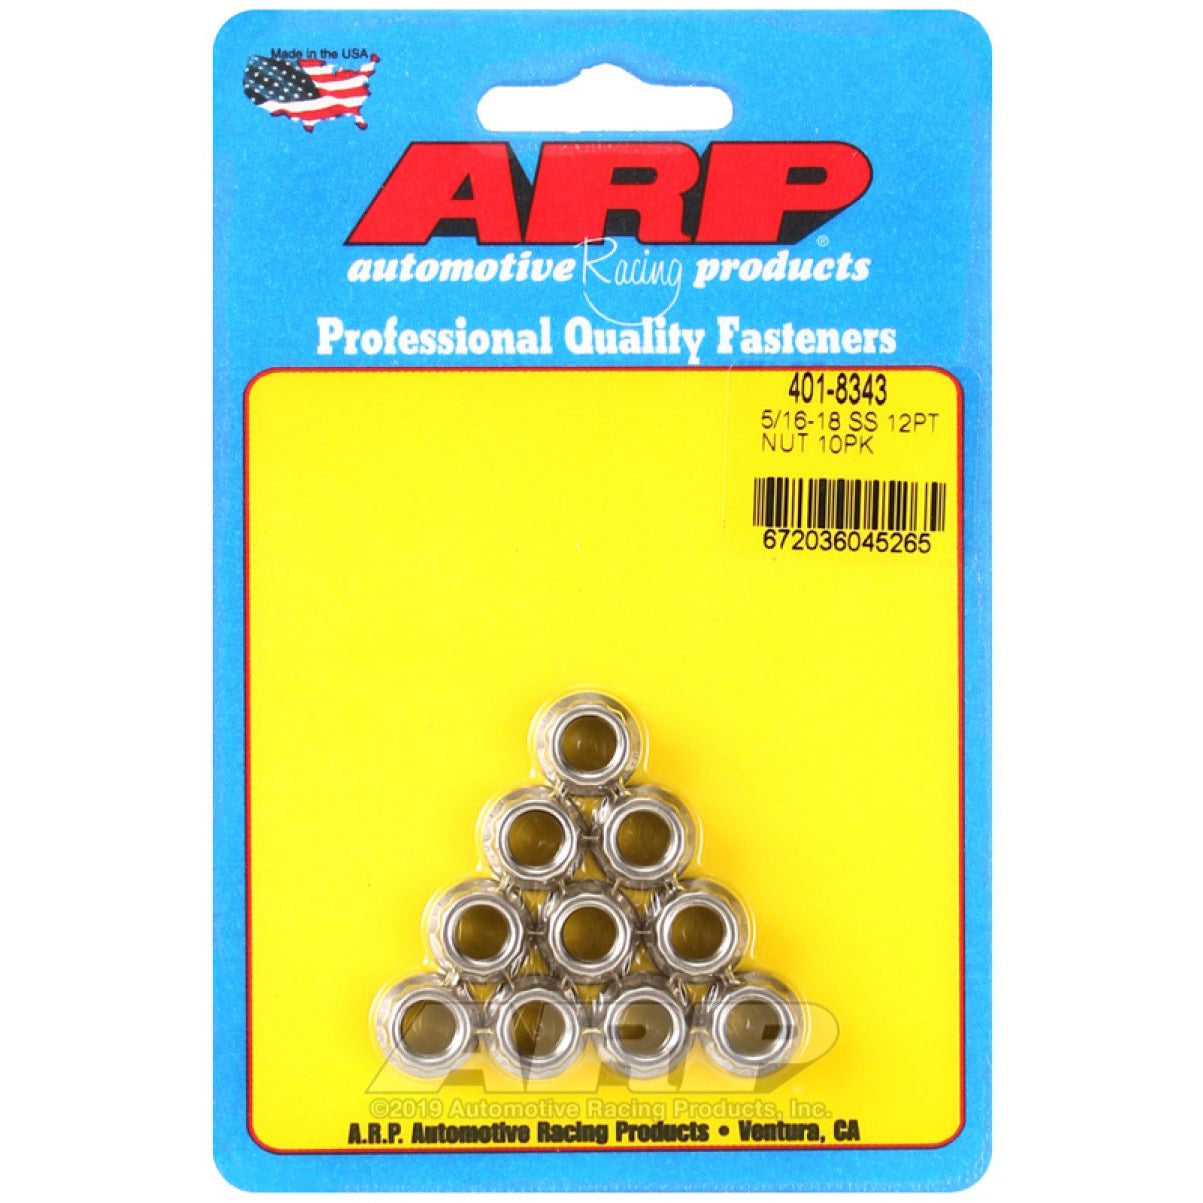 ARP 5/16-18 12PT Nut Kit SS - 10 PK ARP Hardware Kits - Other